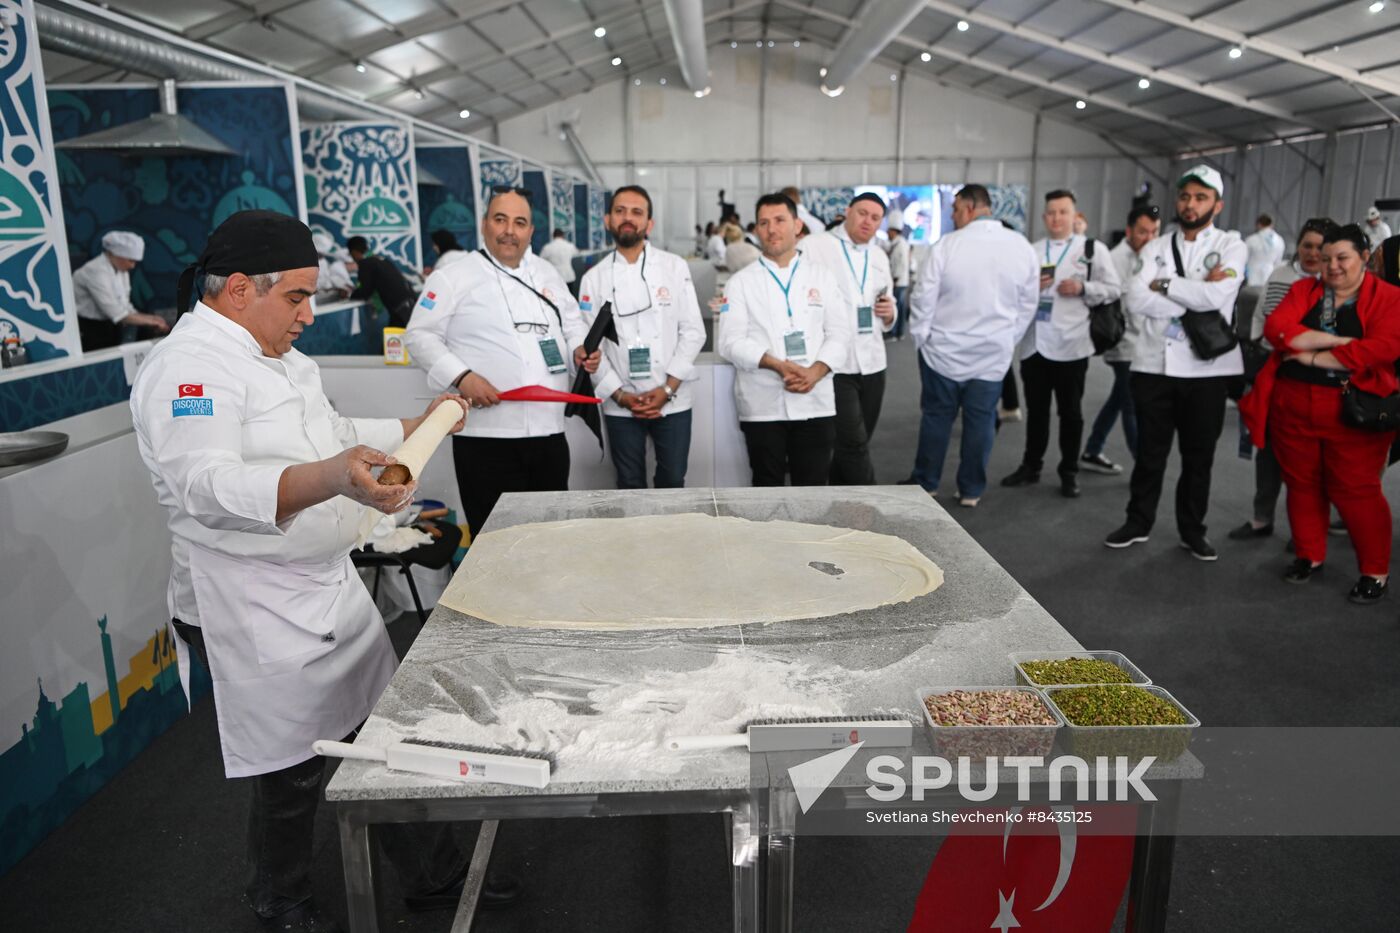 KAZANFORUM 2023. Dialogue of Cultures: Opening of the International Cup of Chefs KazanForum 2023